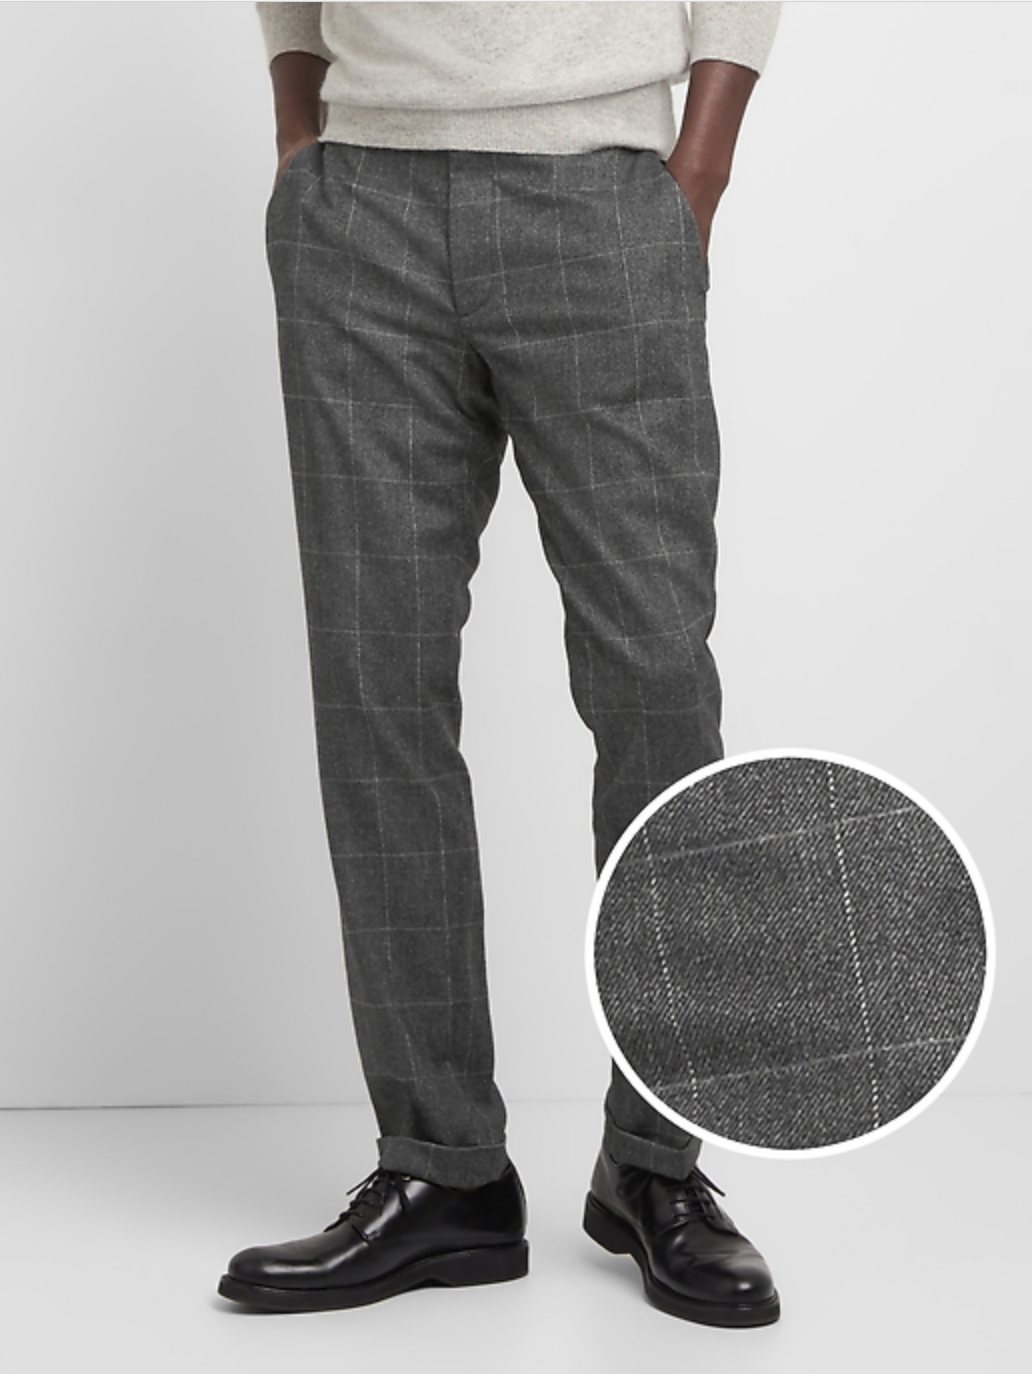 Buy Men Khaki Slim Fit Solid Casual Trousers Online  793960  Allen Solly